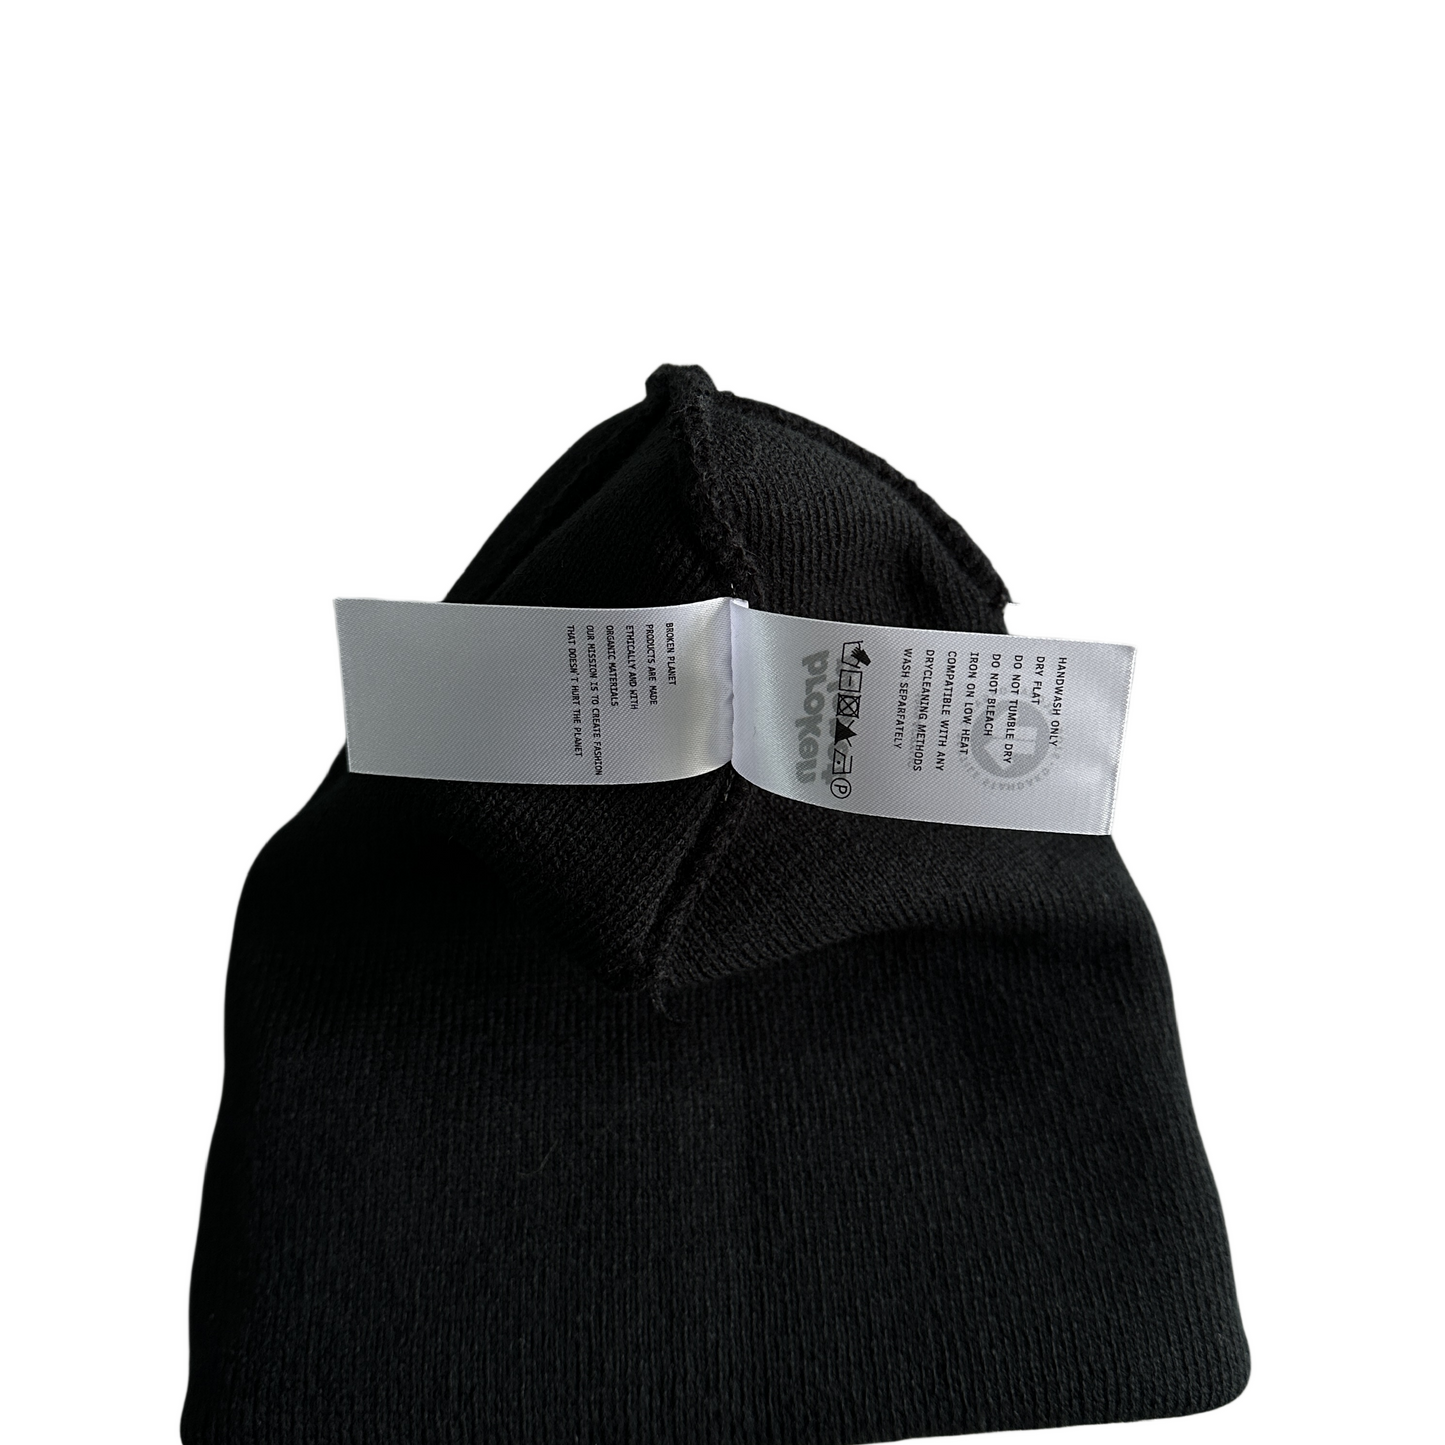 Broken Planet Dark Hours Beanie Embroidered Knitted Hat Cap - Black